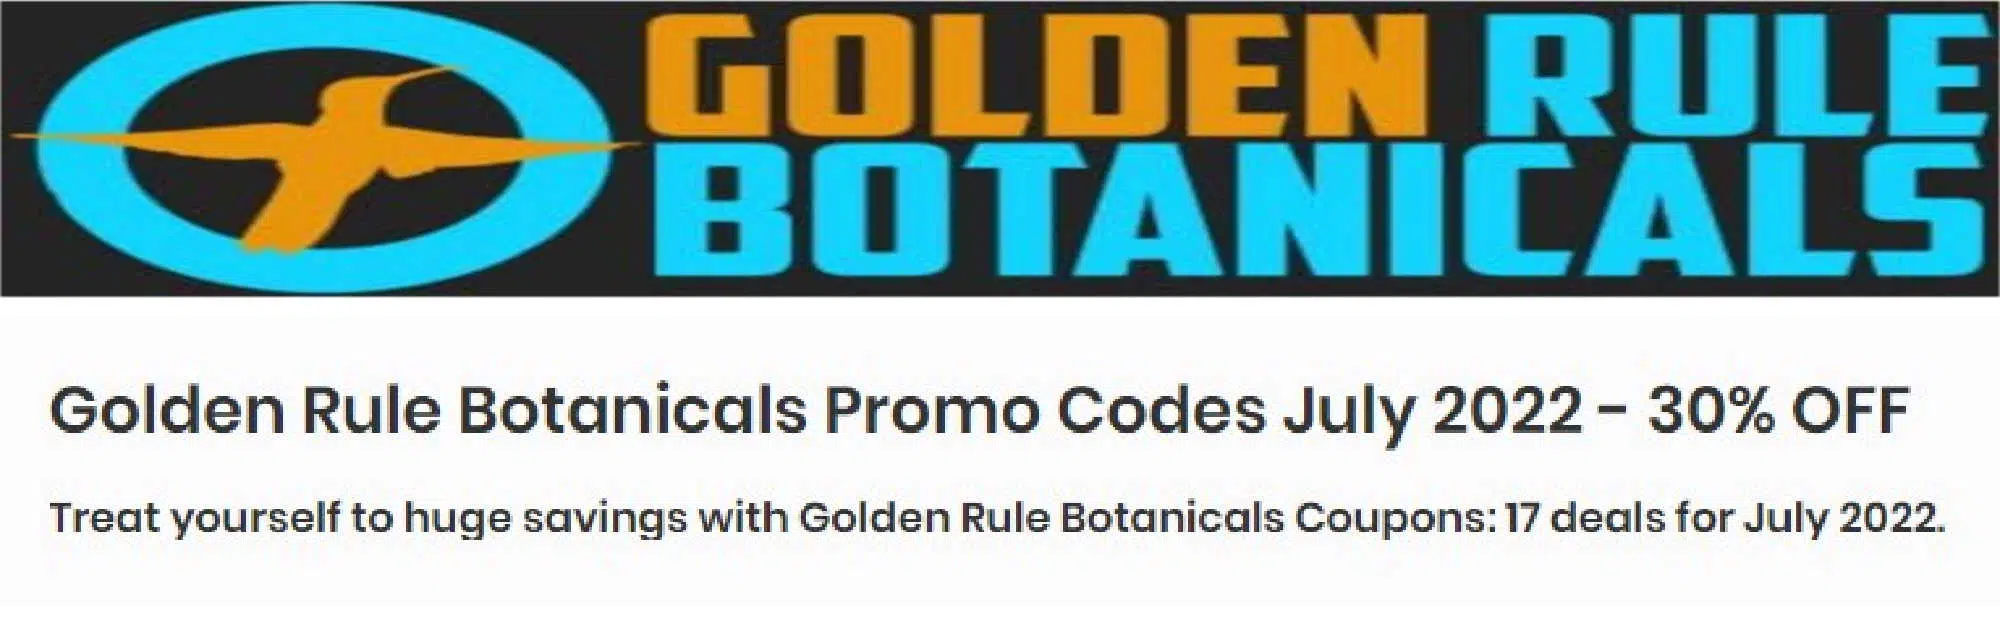 image of golden rule botanicals coupon